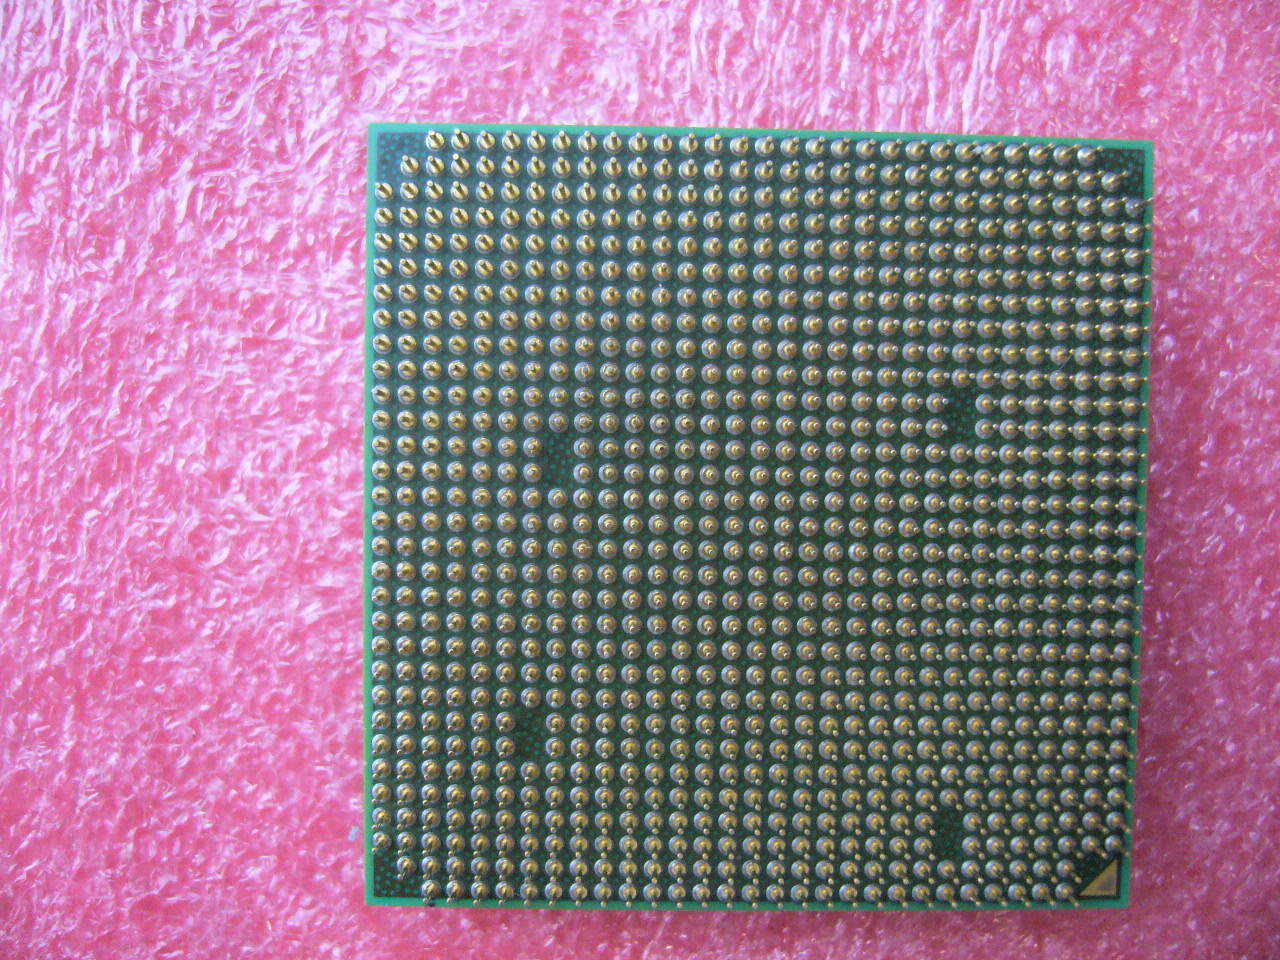 QTY 1x AMD Athlon 64 X2 6000+ 3 GHz Dual-Core (ADX6000IAA6CZ) CPU Socket AM2 - Click Image to Close